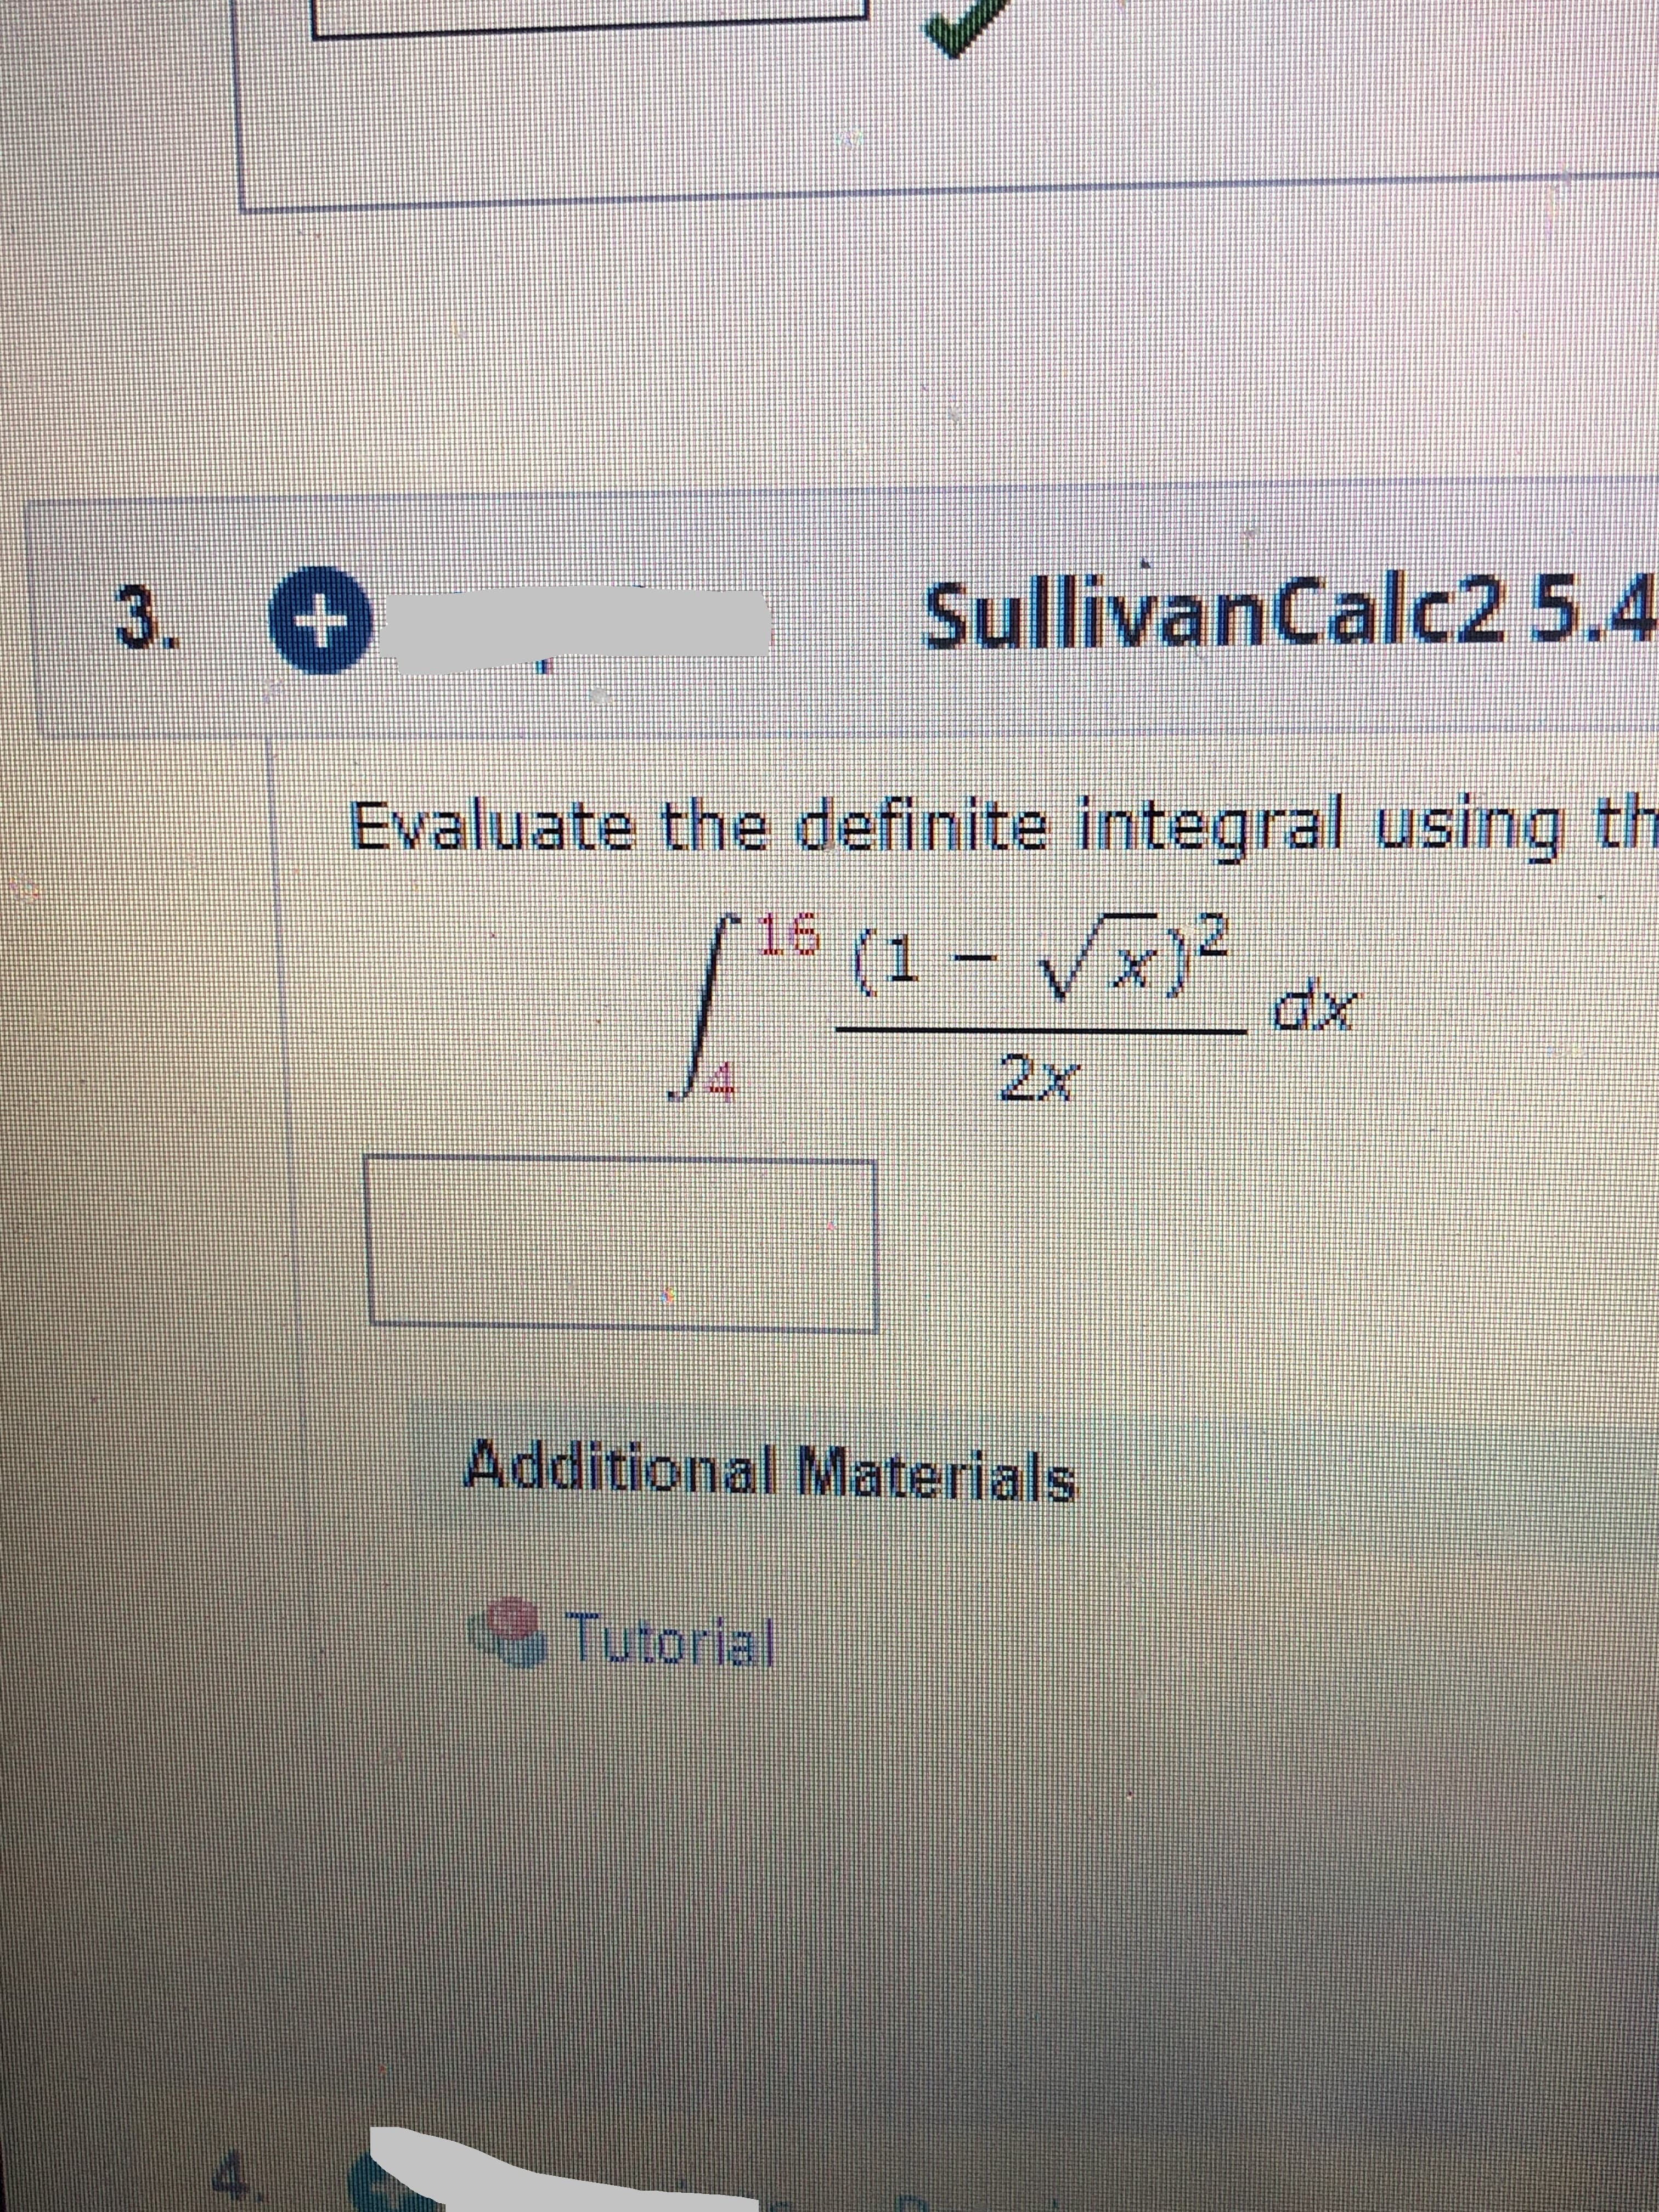 3. +
SullivanCalc2 5.4
Evaluate the definite integral using th
16 (1 - V)
2x
Additional Materials
Tutorial
4.
